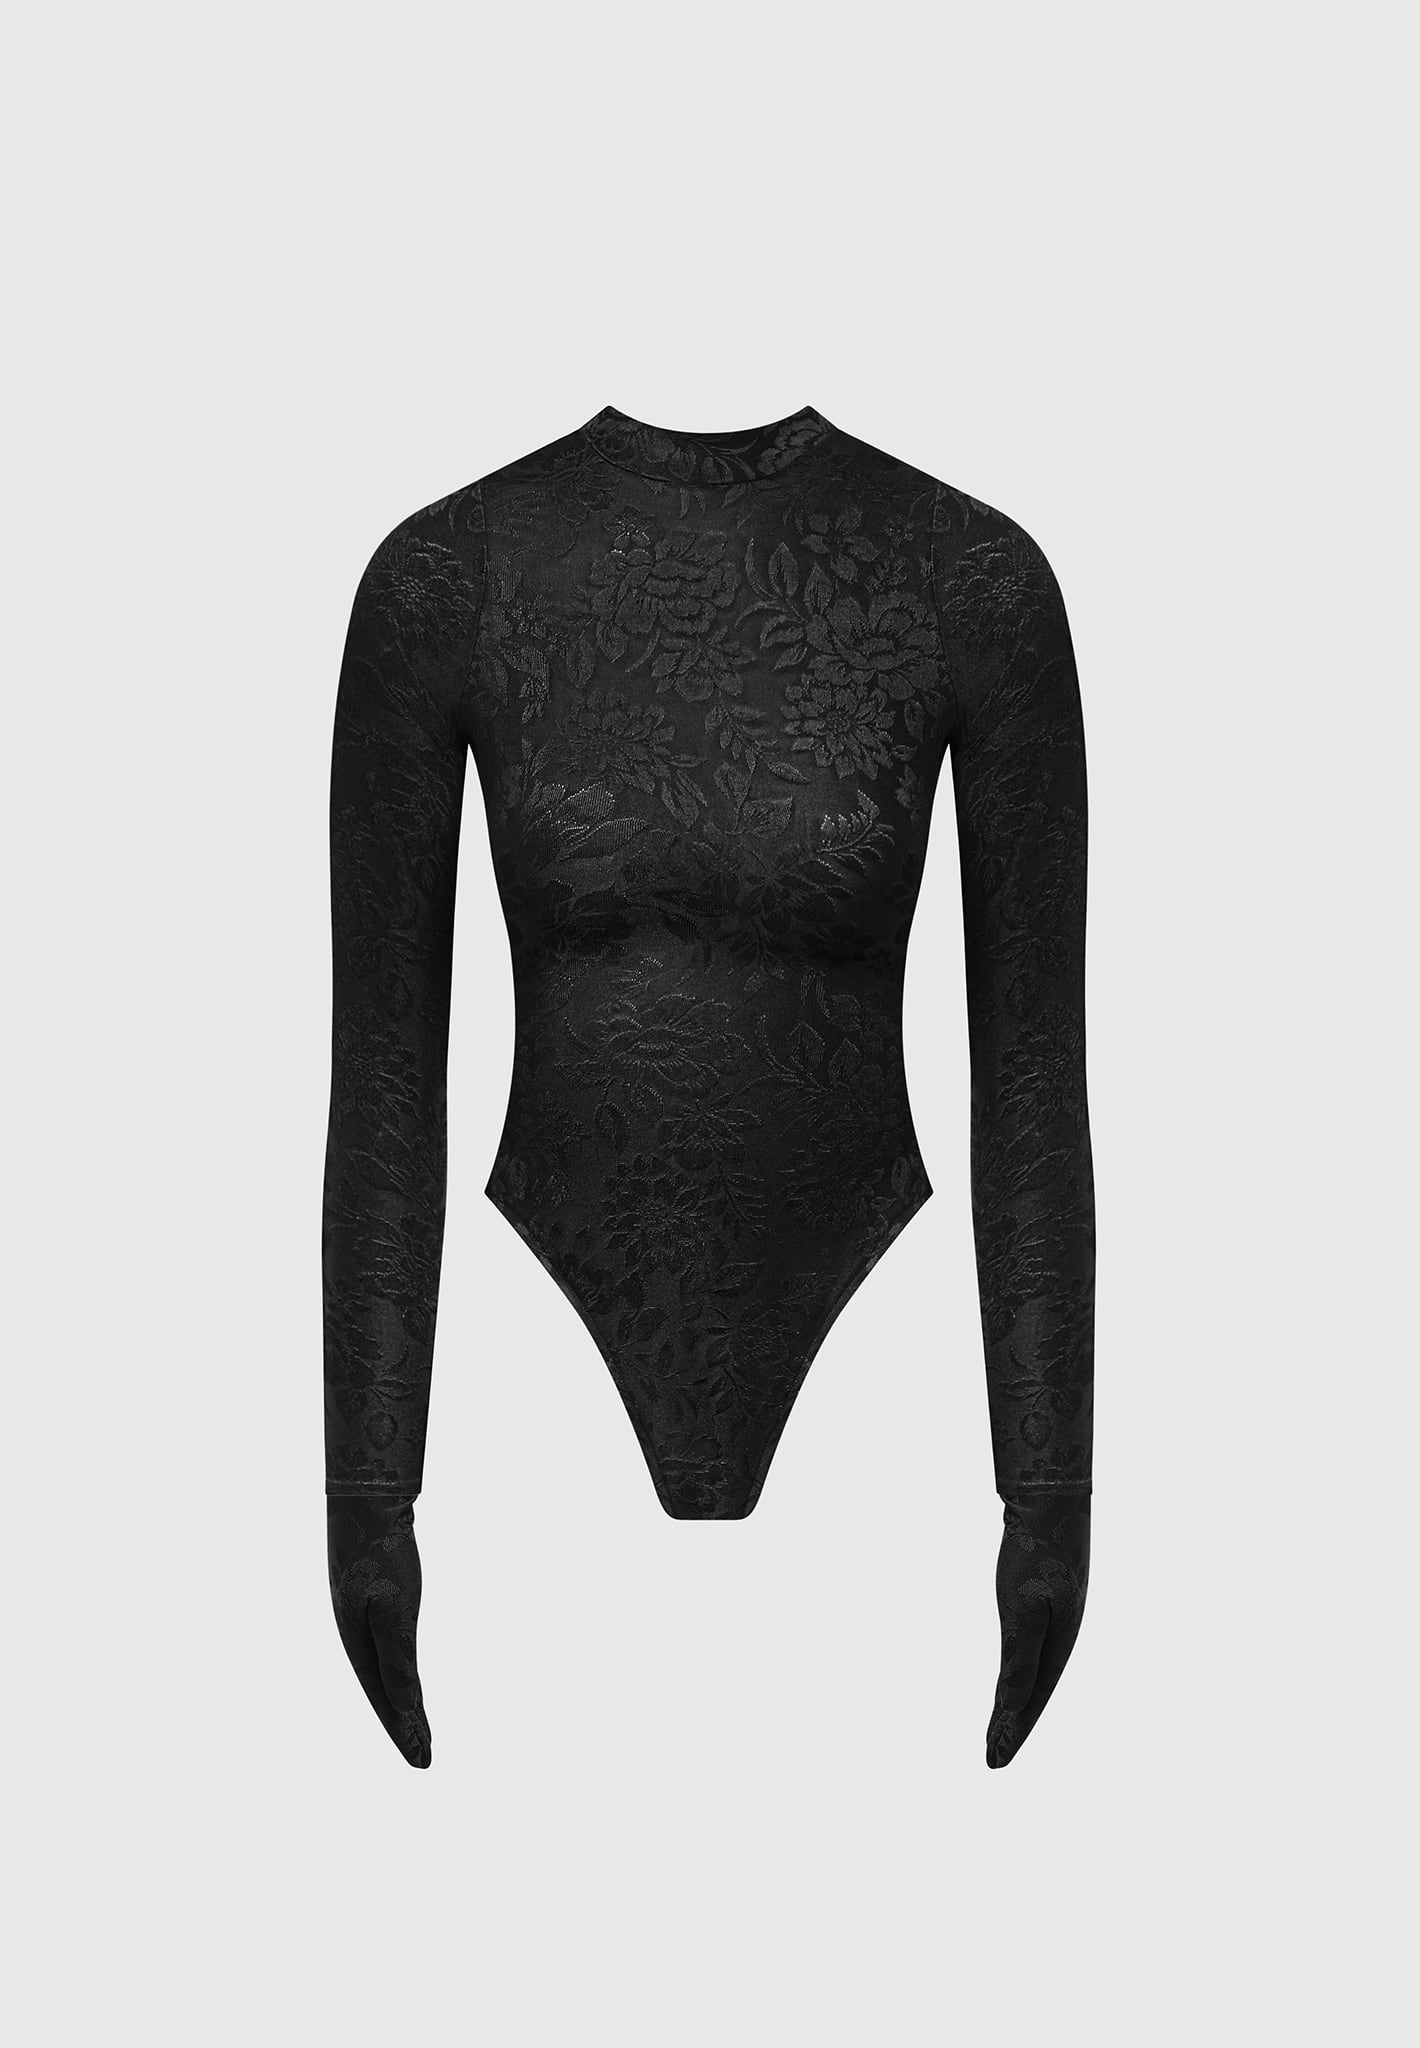 colsie Marled Gray Bodysuit Size M - 48% off